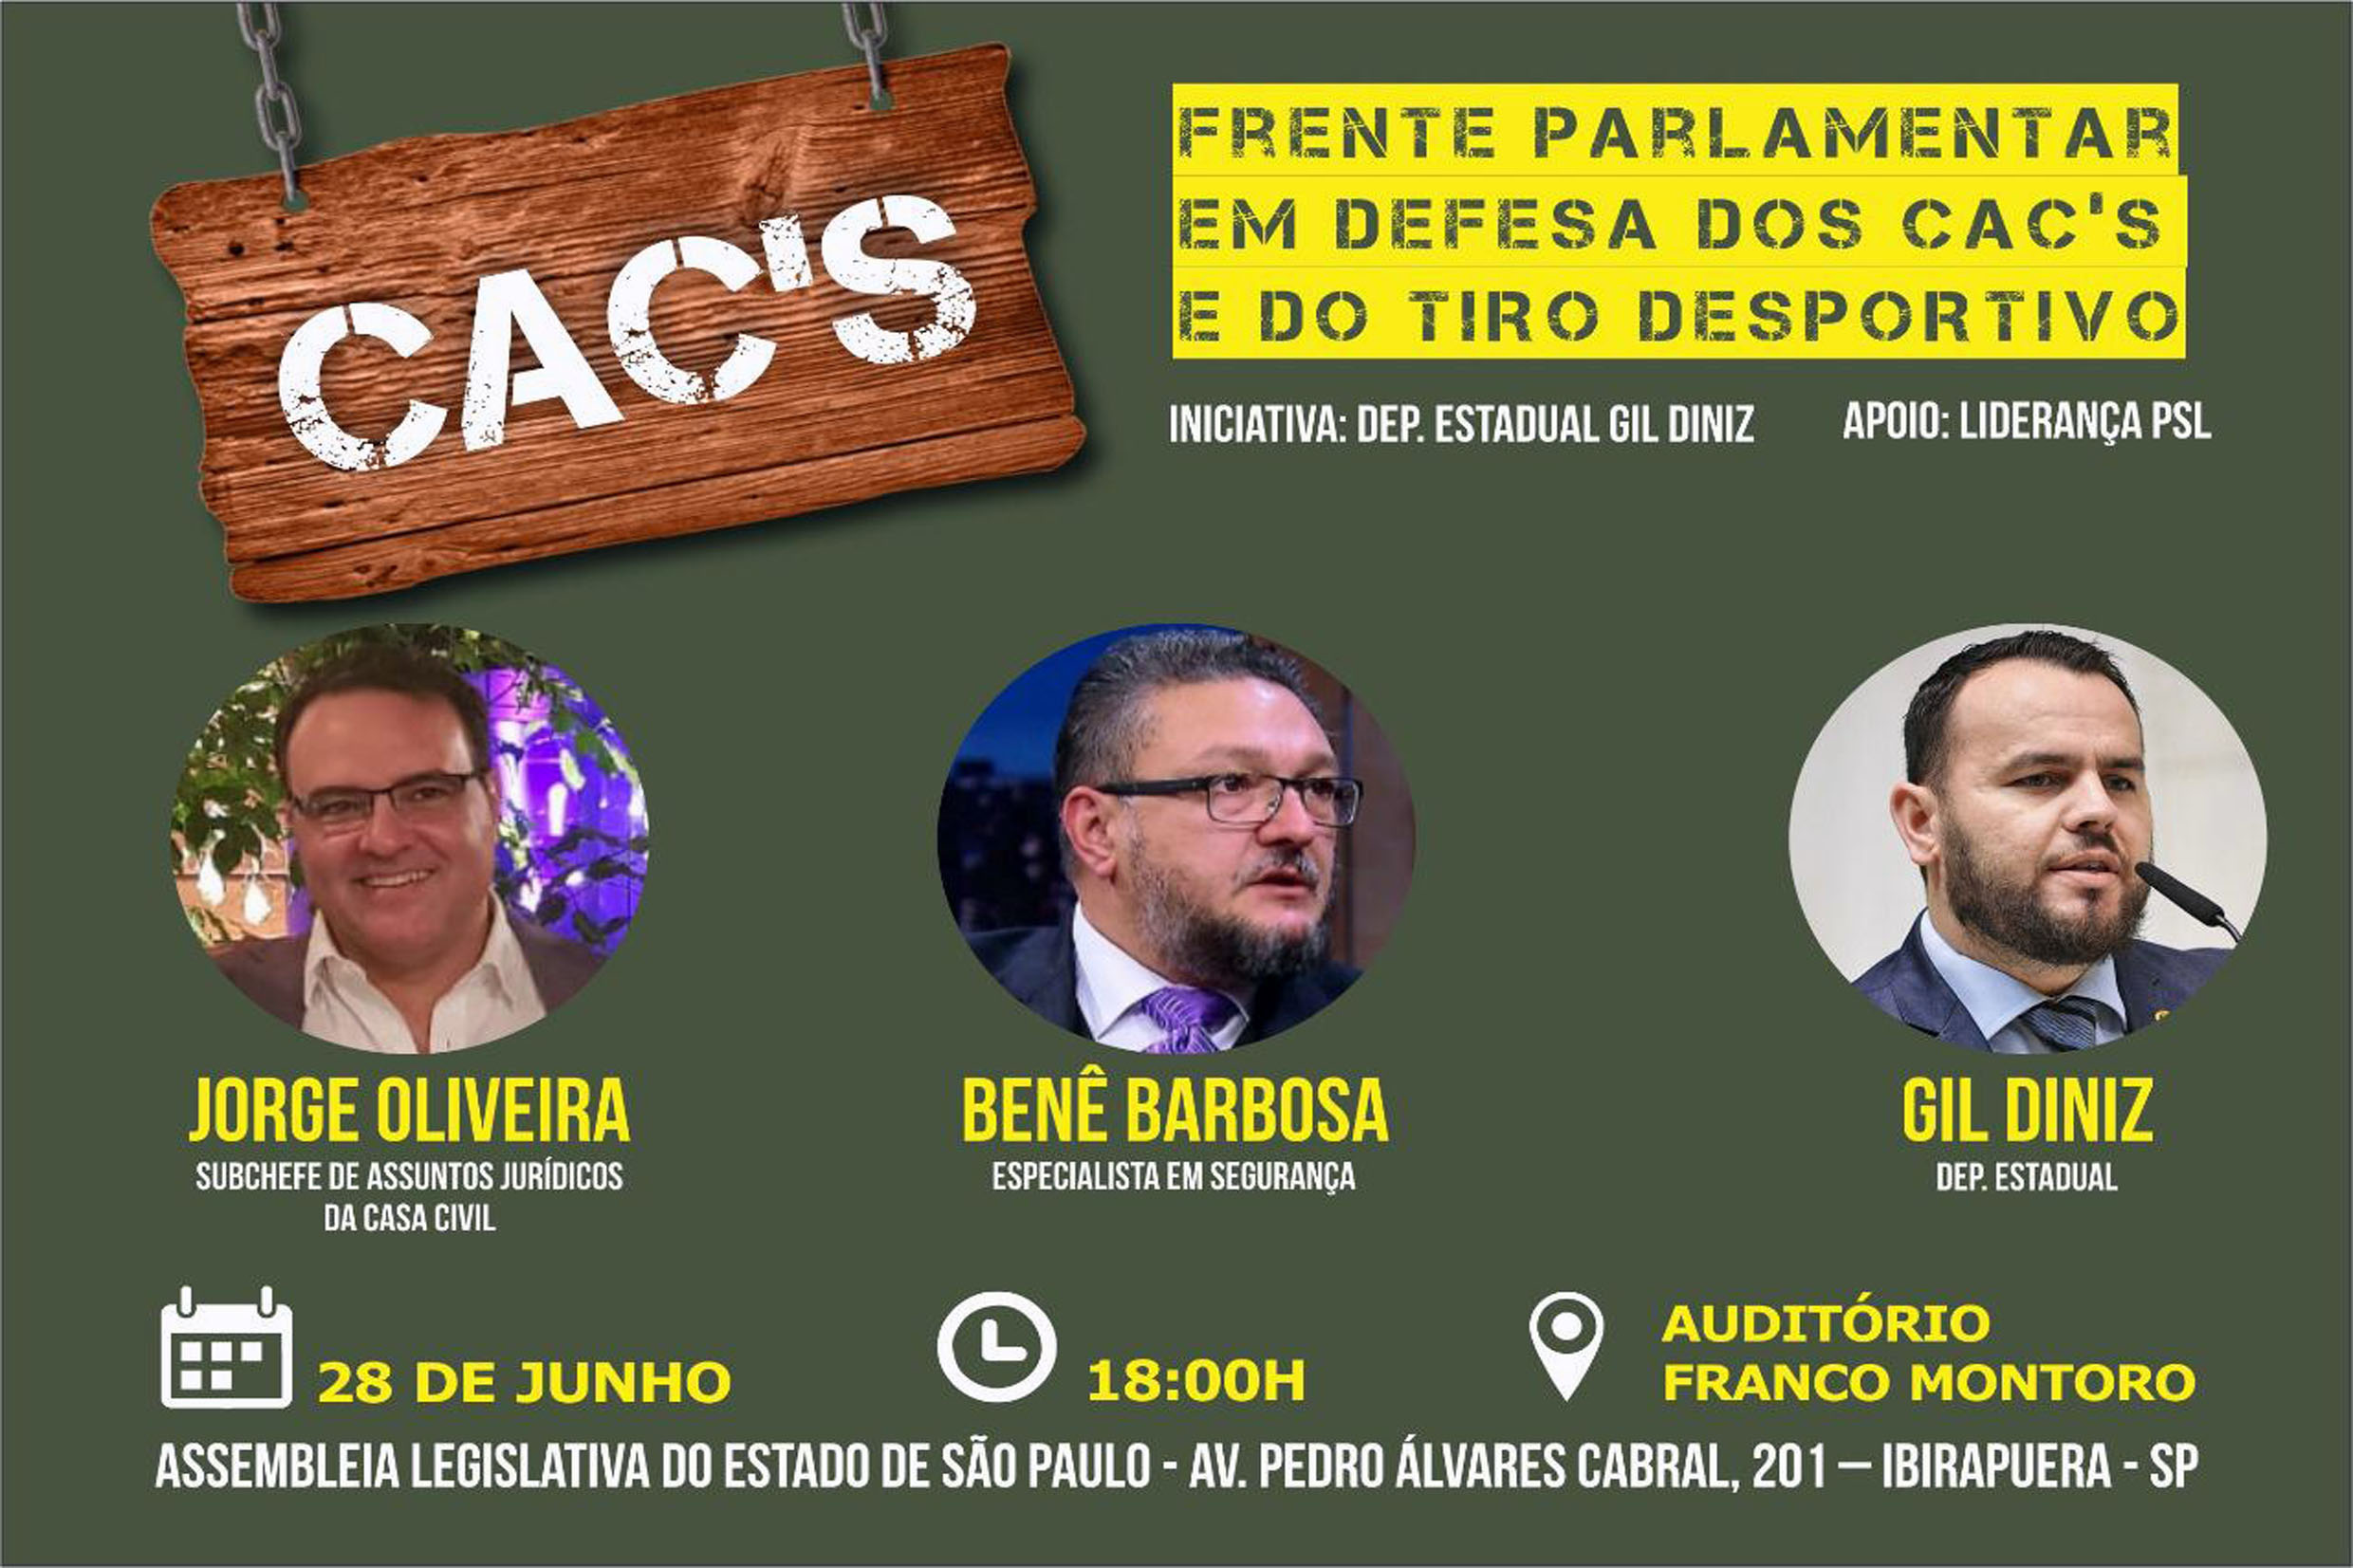 Convite da Frente Parlamentar<a style='float:right;color:#ccc' href='https://www3.al.sp.gov.br/repositorio/noticia/N-06-2019/fg236594.jpg' target=_blank><i class='bi bi-zoom-in'></i> Clique para ver a imagem </a>